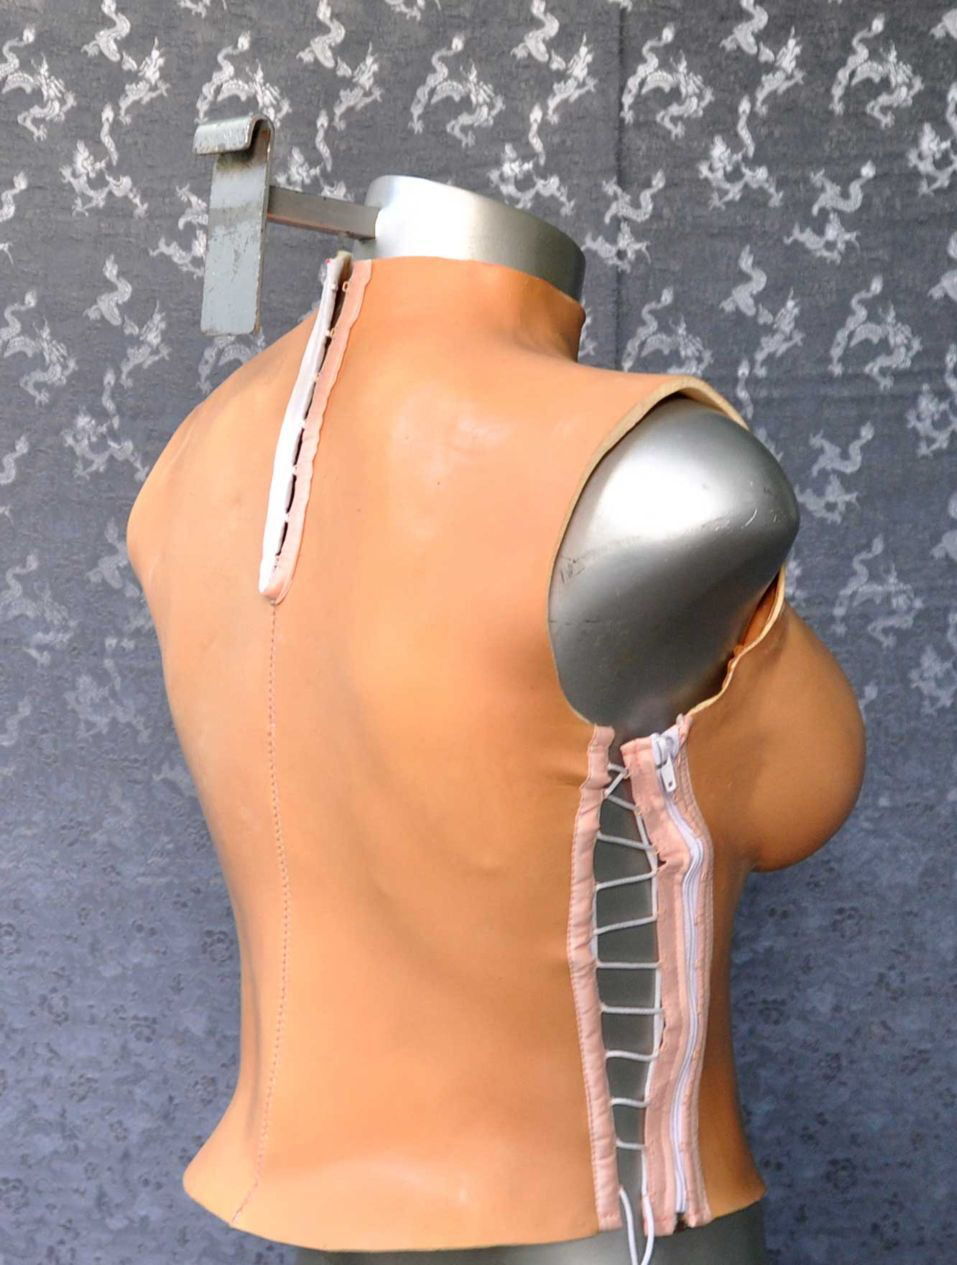 Latex breasts zip